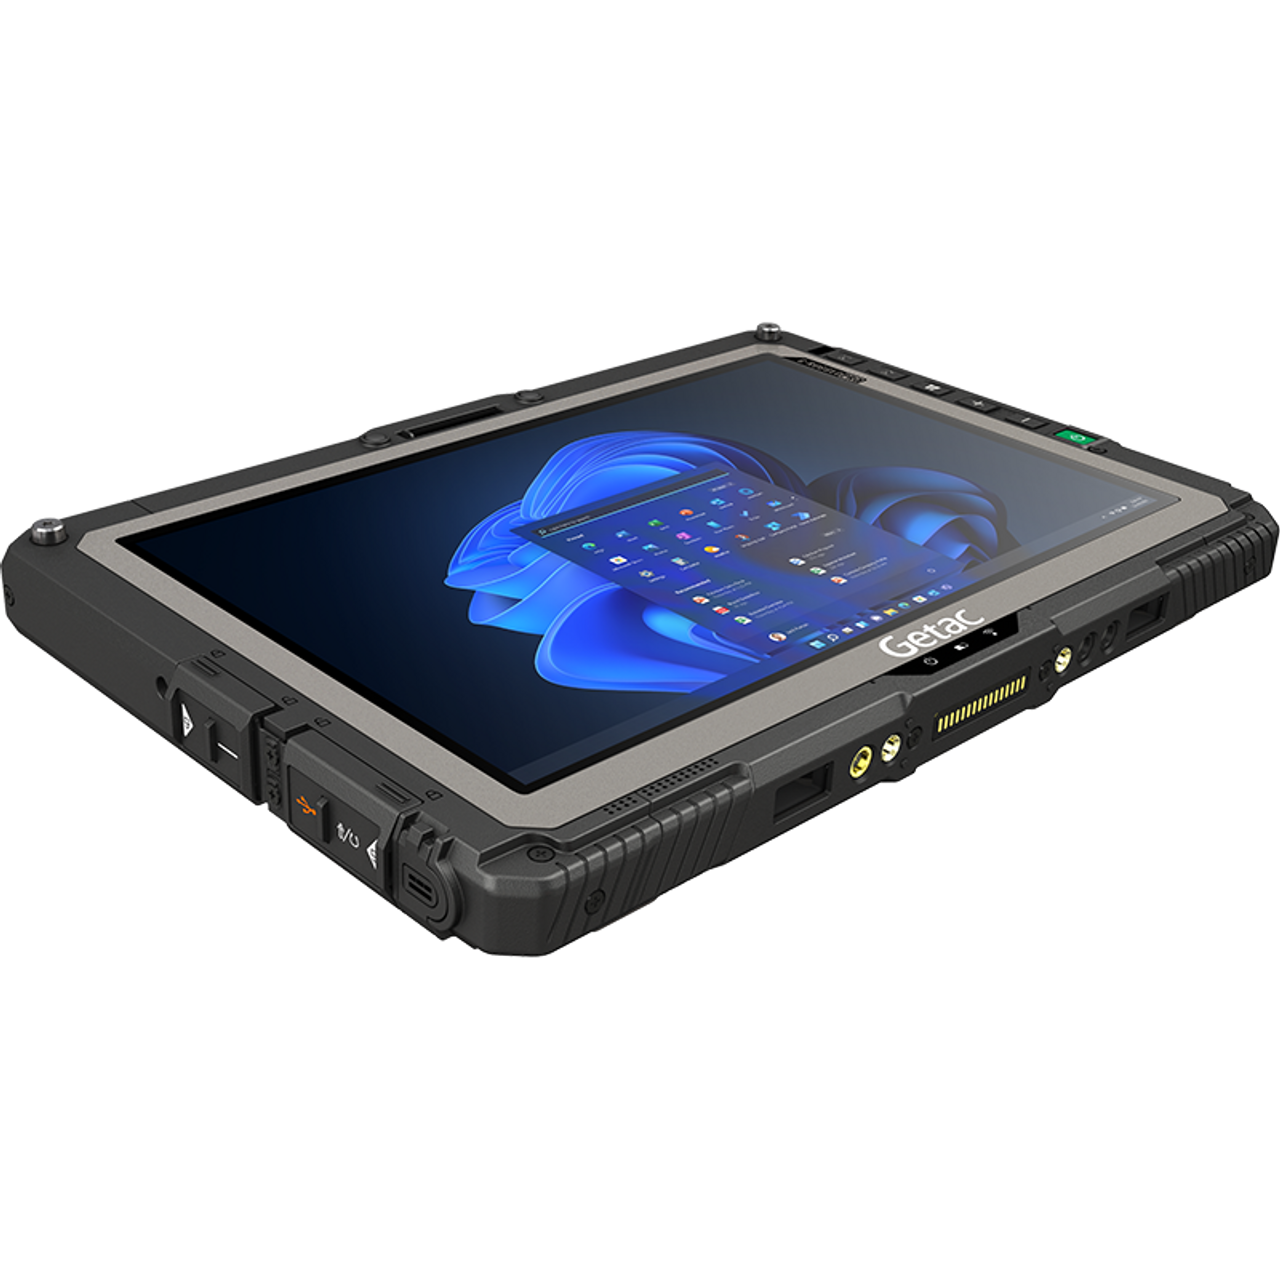 Getac UX10G2-R i5-10210U, Webcam, W 10 Pro x64 with 16GB RAM, 256GB PCIe SSD, SR Full HD LCD + Touchscreen + Hard Tip stylus + Rear Camera, US Power Cord, WIFI+BT+4G LTE (EM7511) w/ GPS, 3yb2b